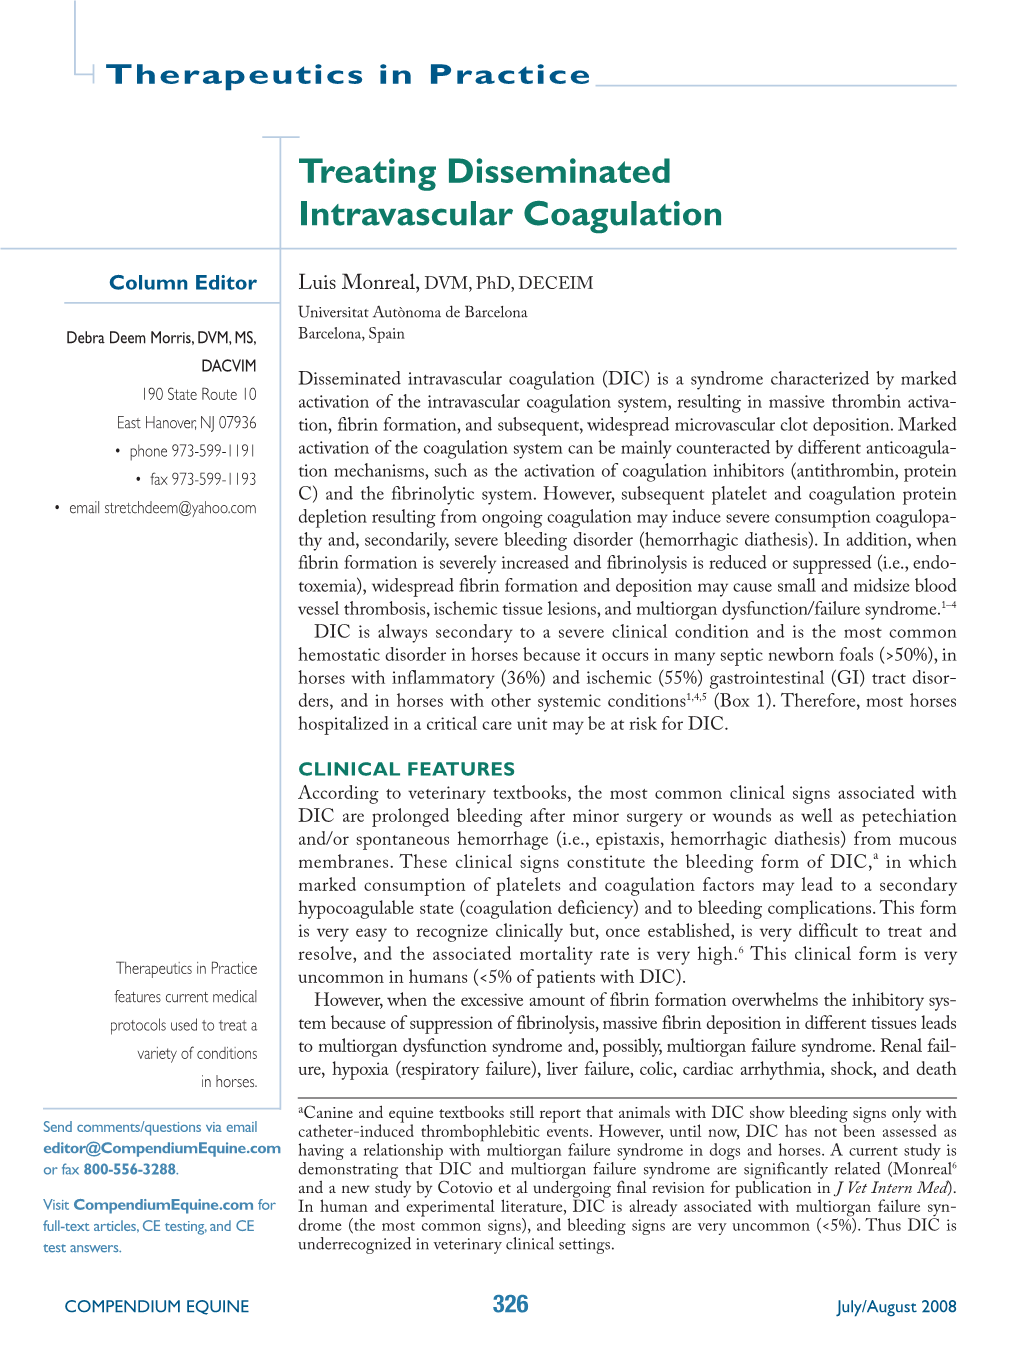 Treating Disseminated Intravascular Coagulation